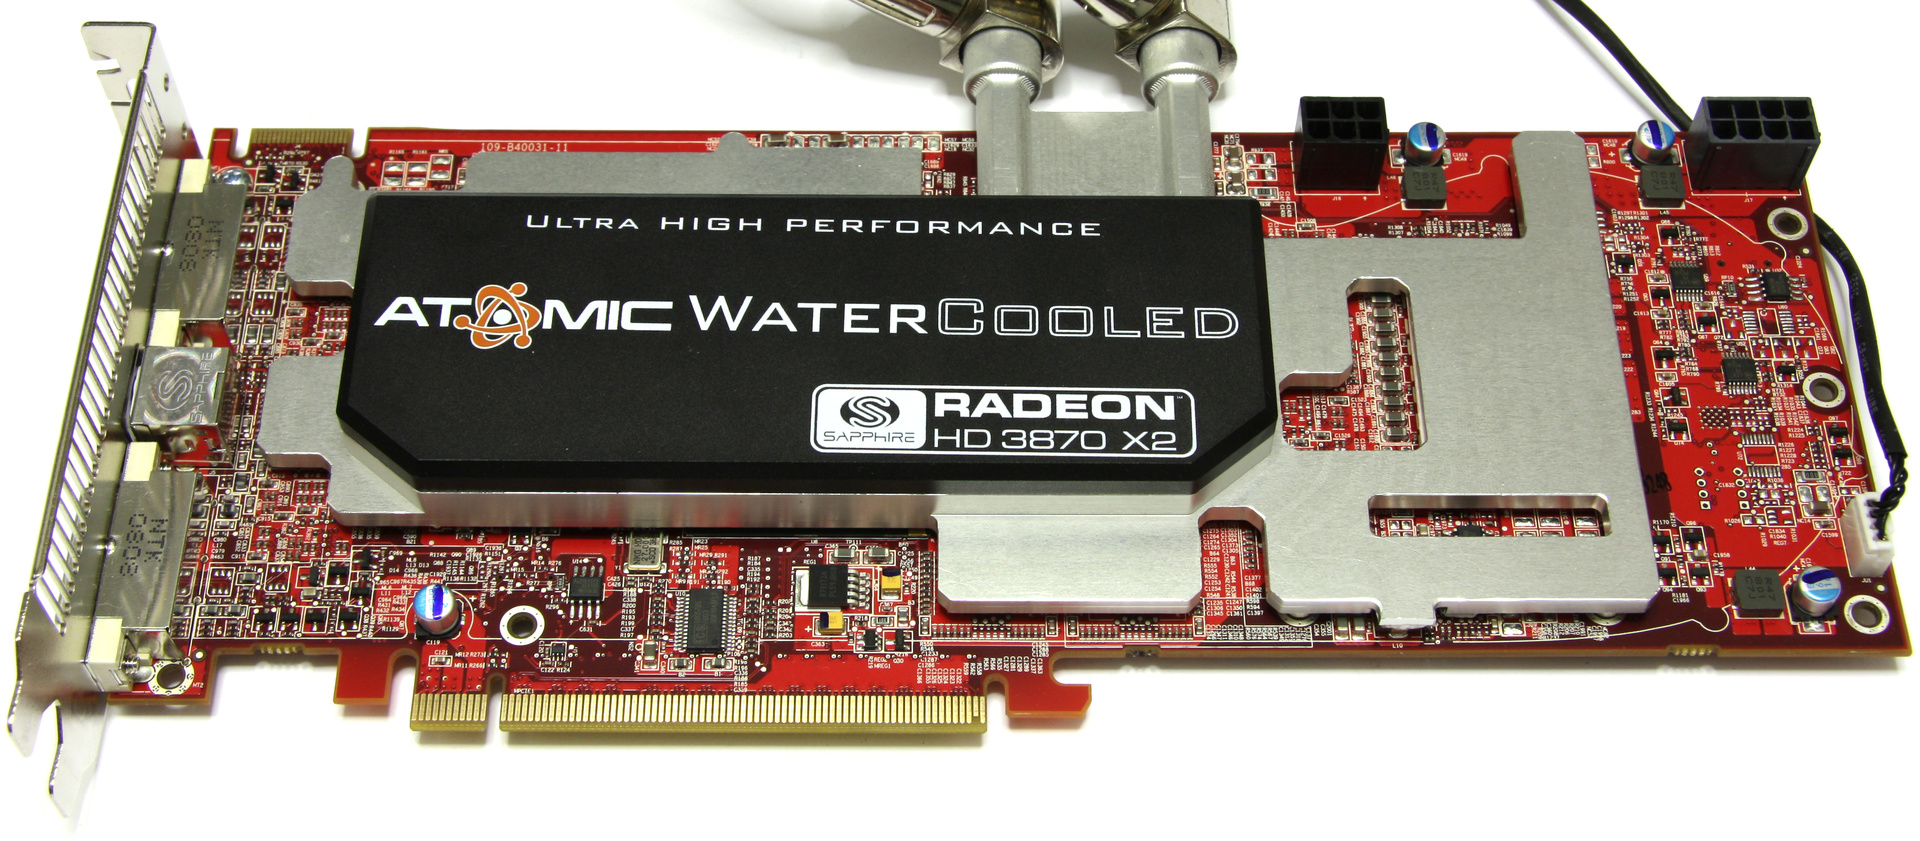 Sapphire Radeon HD 3870 X2 Atomic